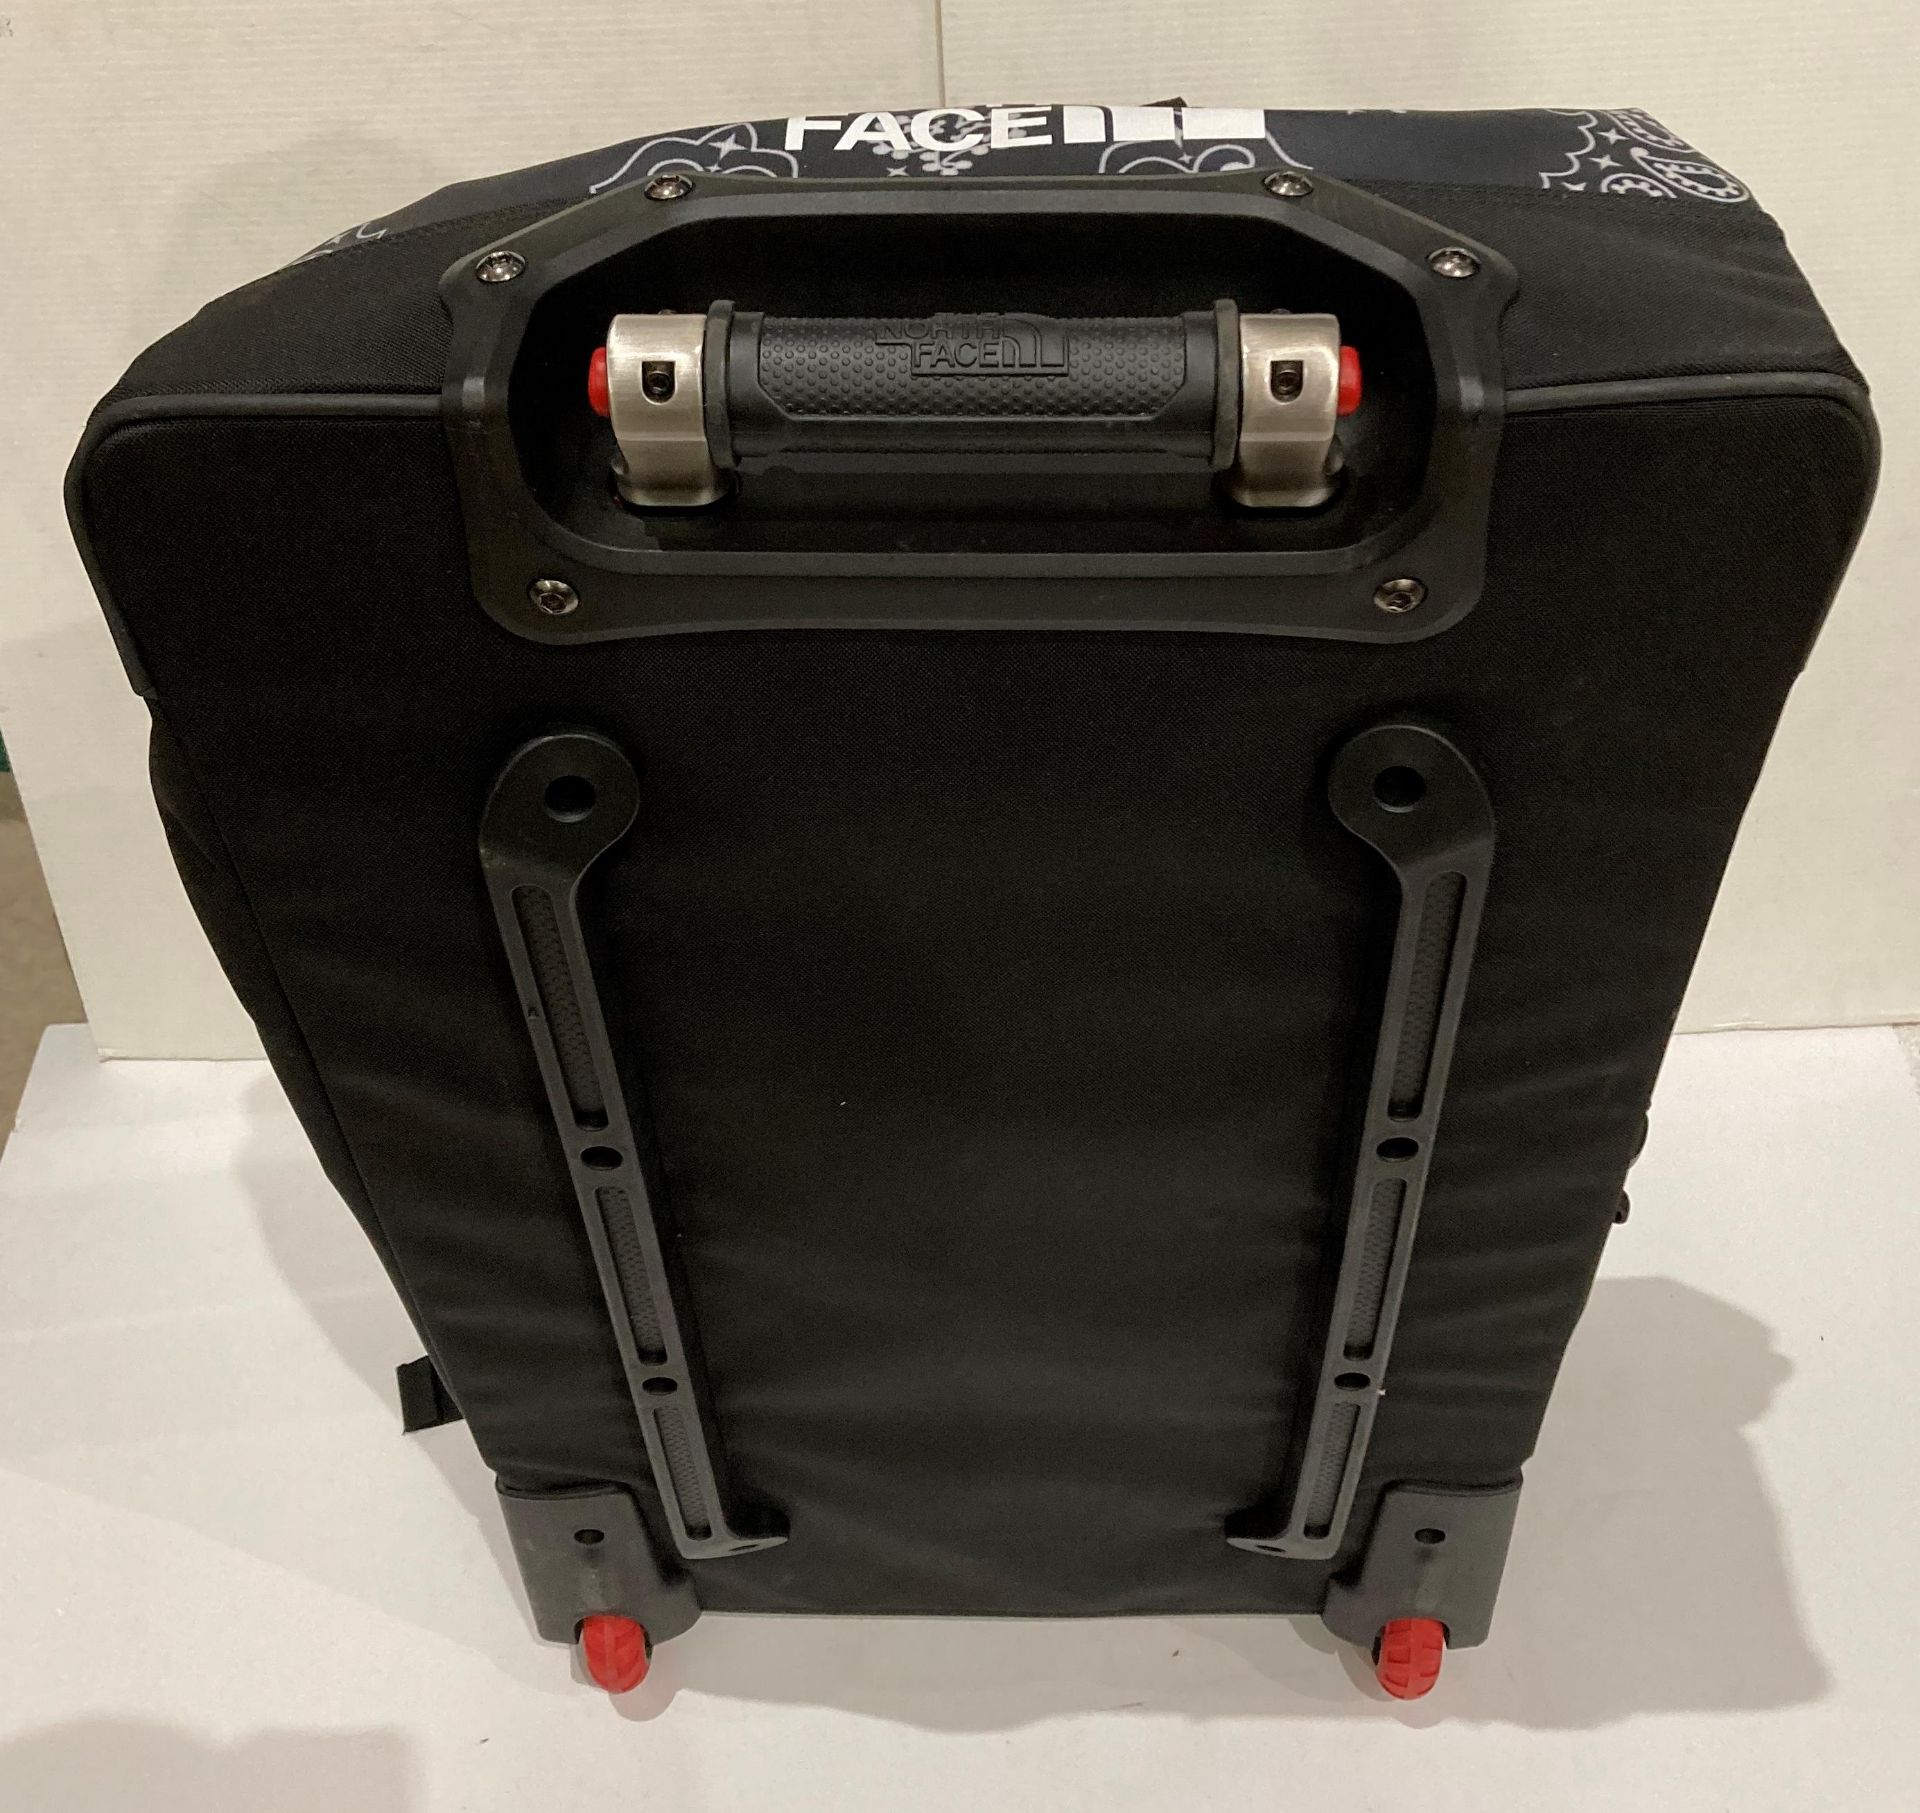 The North Face Bandana Rolling Thun TNF black print medium outdoor travel bag/case on wheels - Image 2 of 3